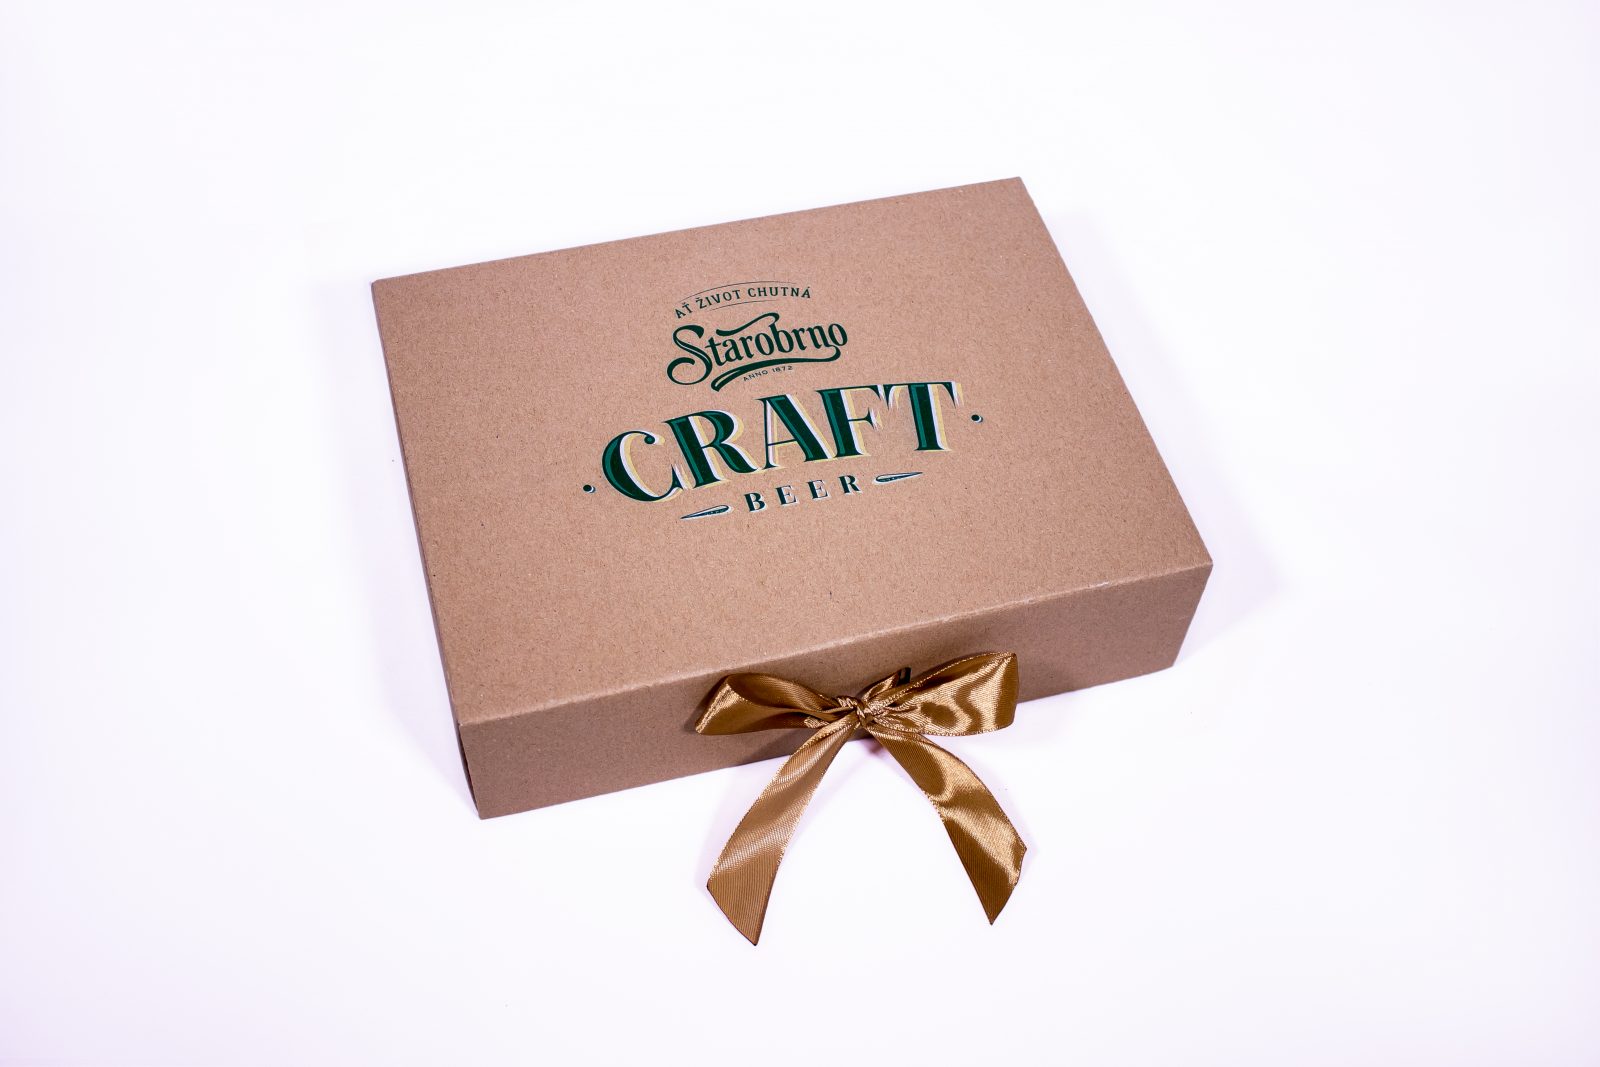 Starobrno Craft Beer Packaging by Luxusní Krabičky